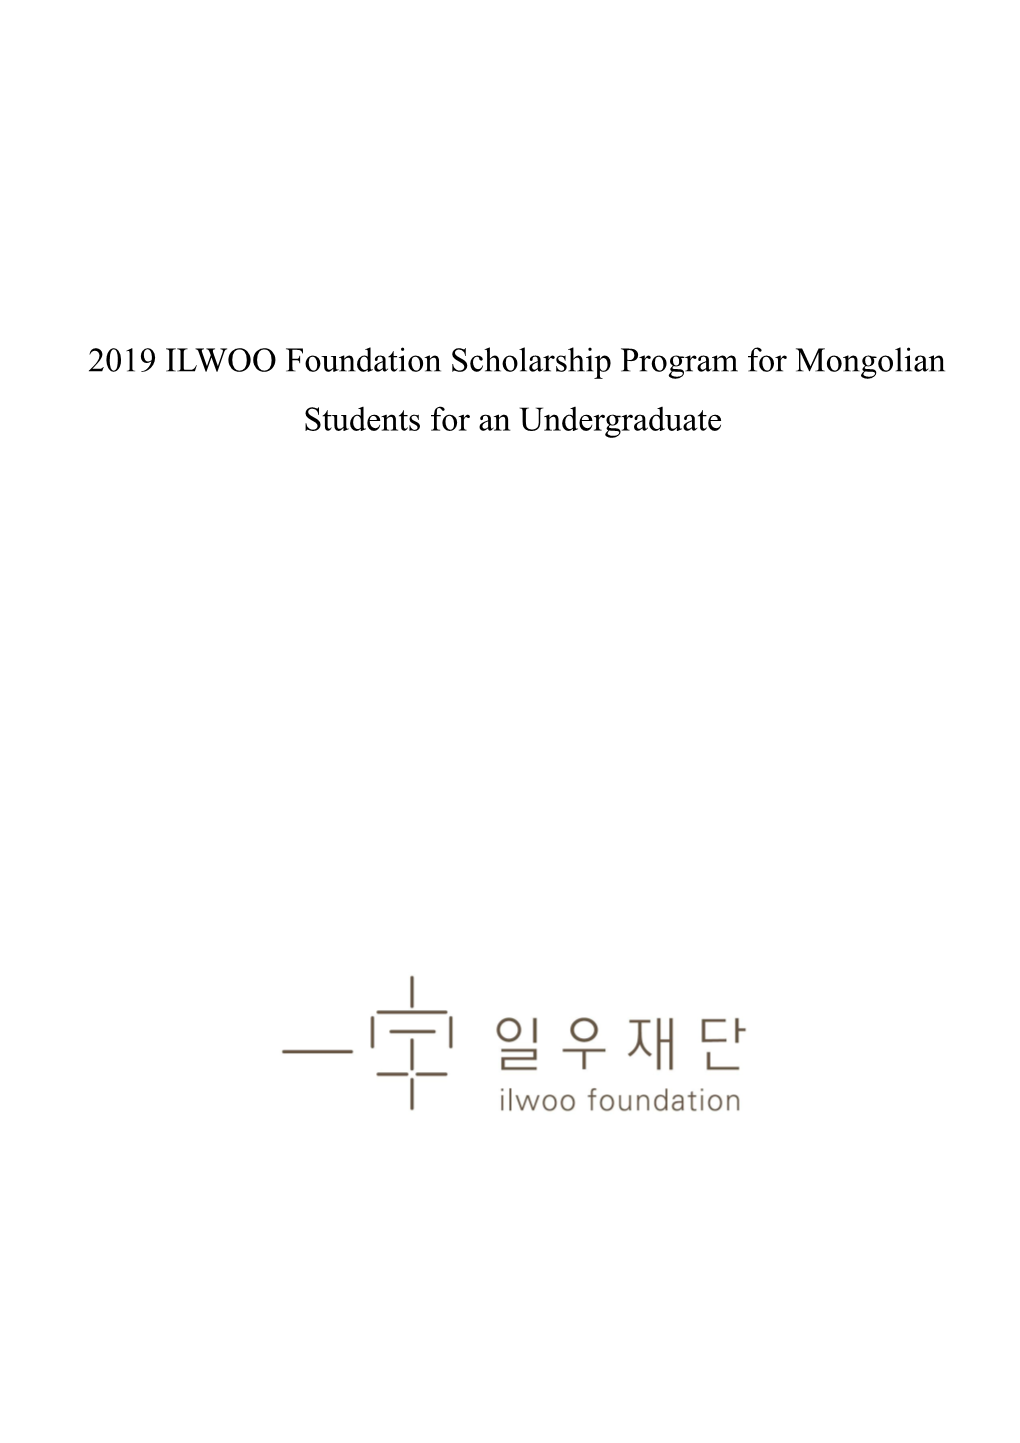 2019 ILWOO Foundation Scholarship Program for Mongolian Students for an Undergraduate